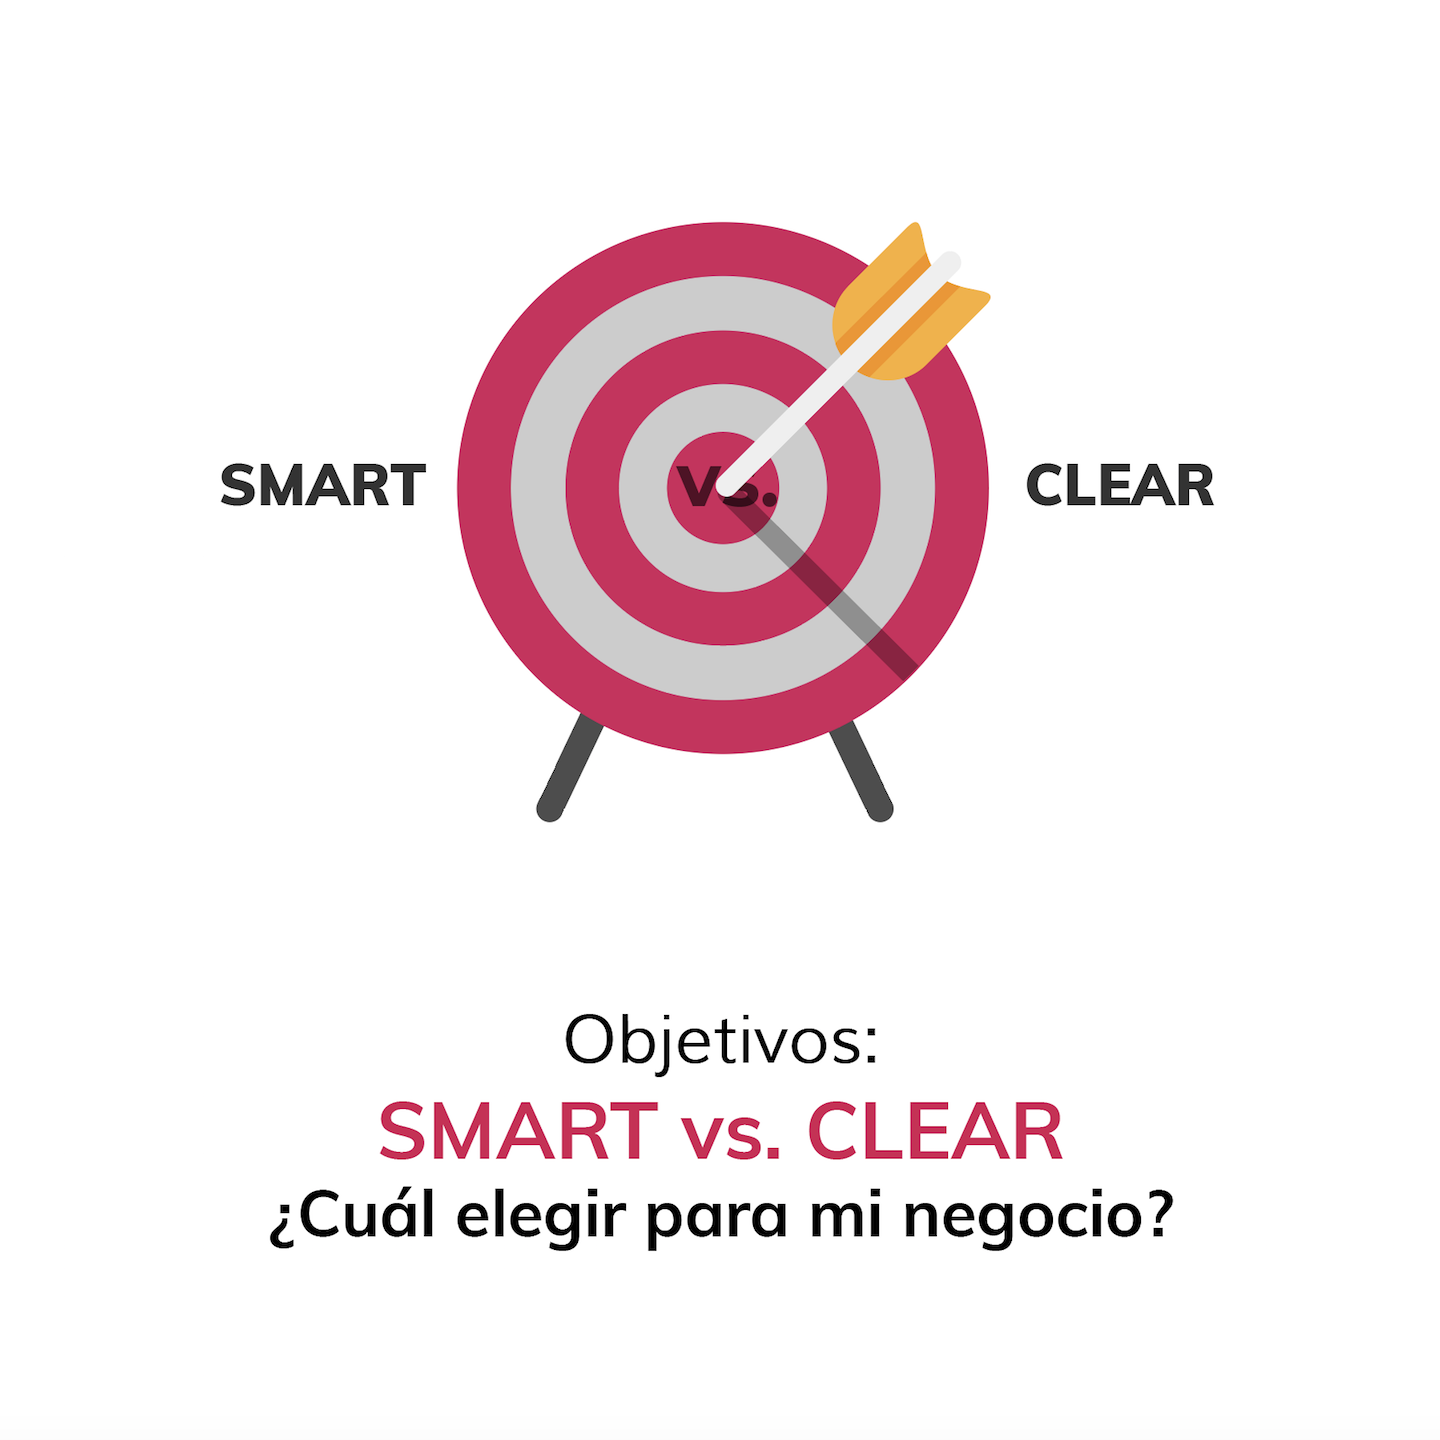 SMART vs CLEAR